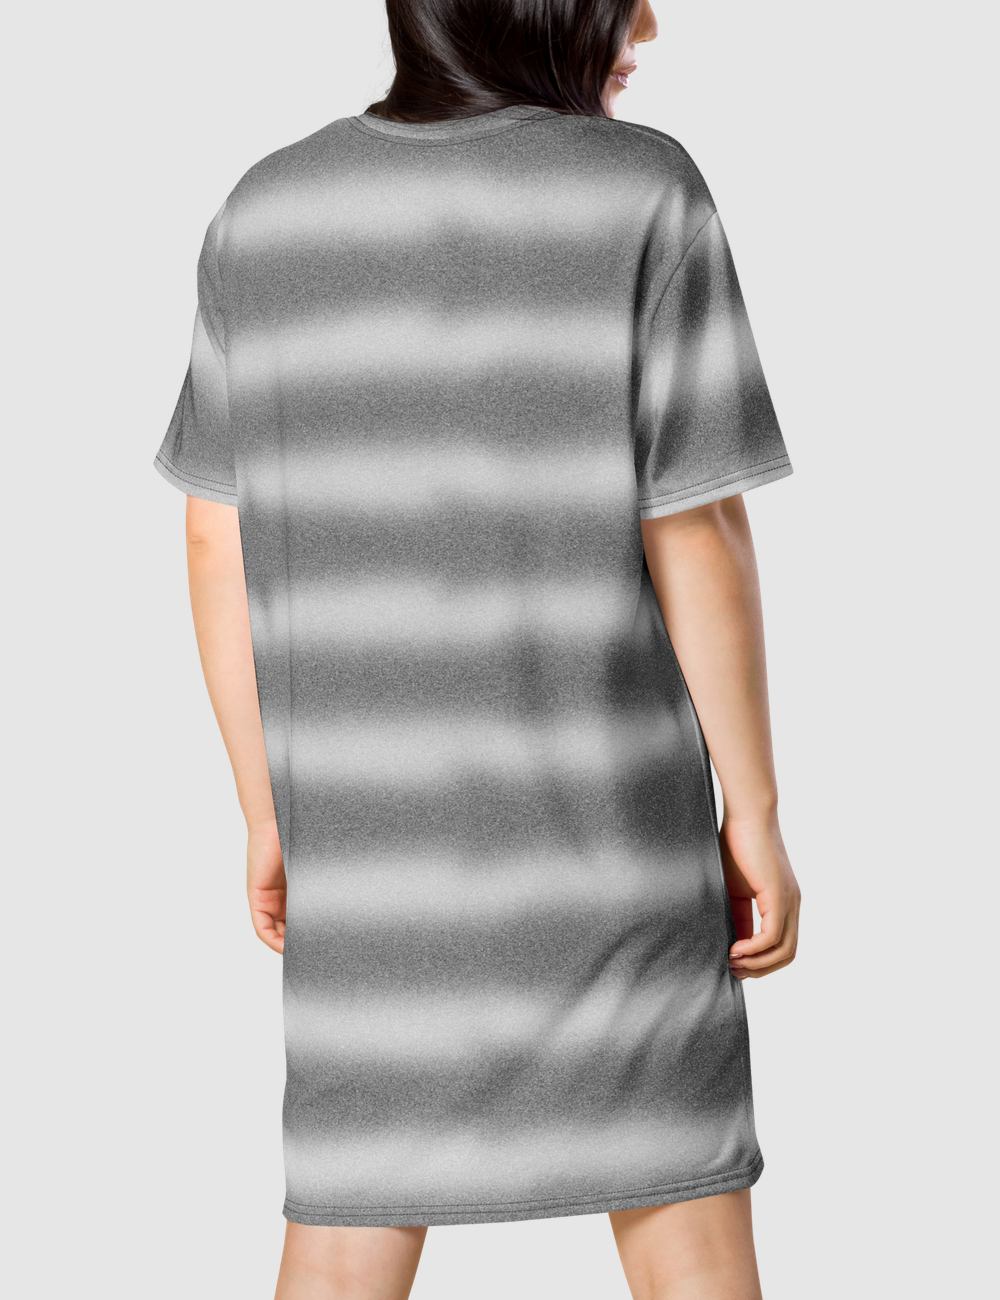 Abstract Grey Heather Tie Dye T-Shirt Dress OniTakai